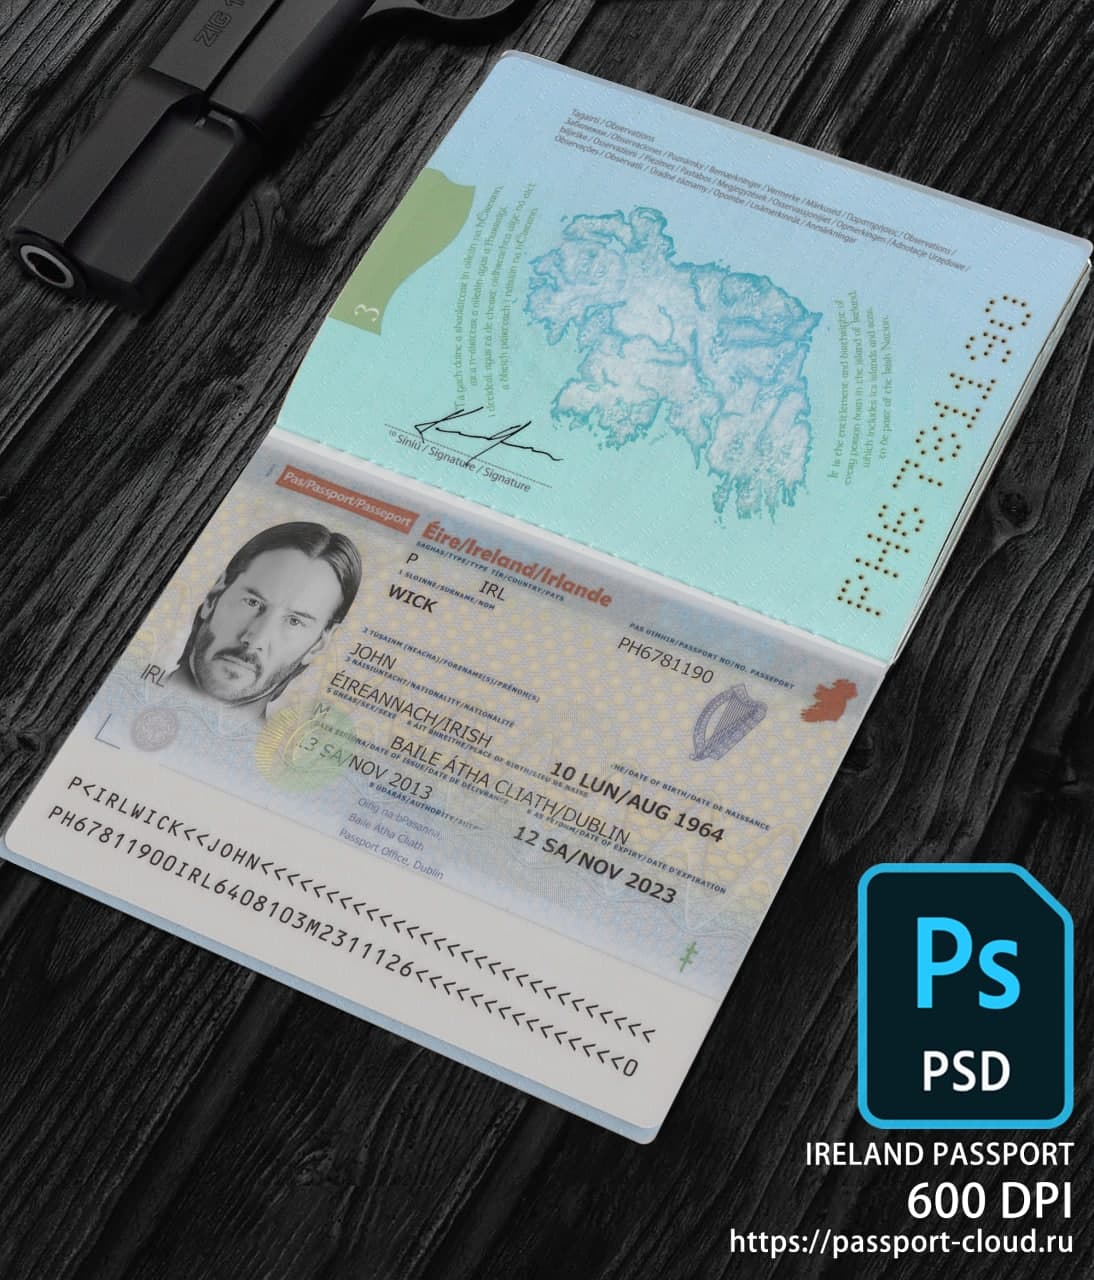 Ireland Passport 2013+ PSD1